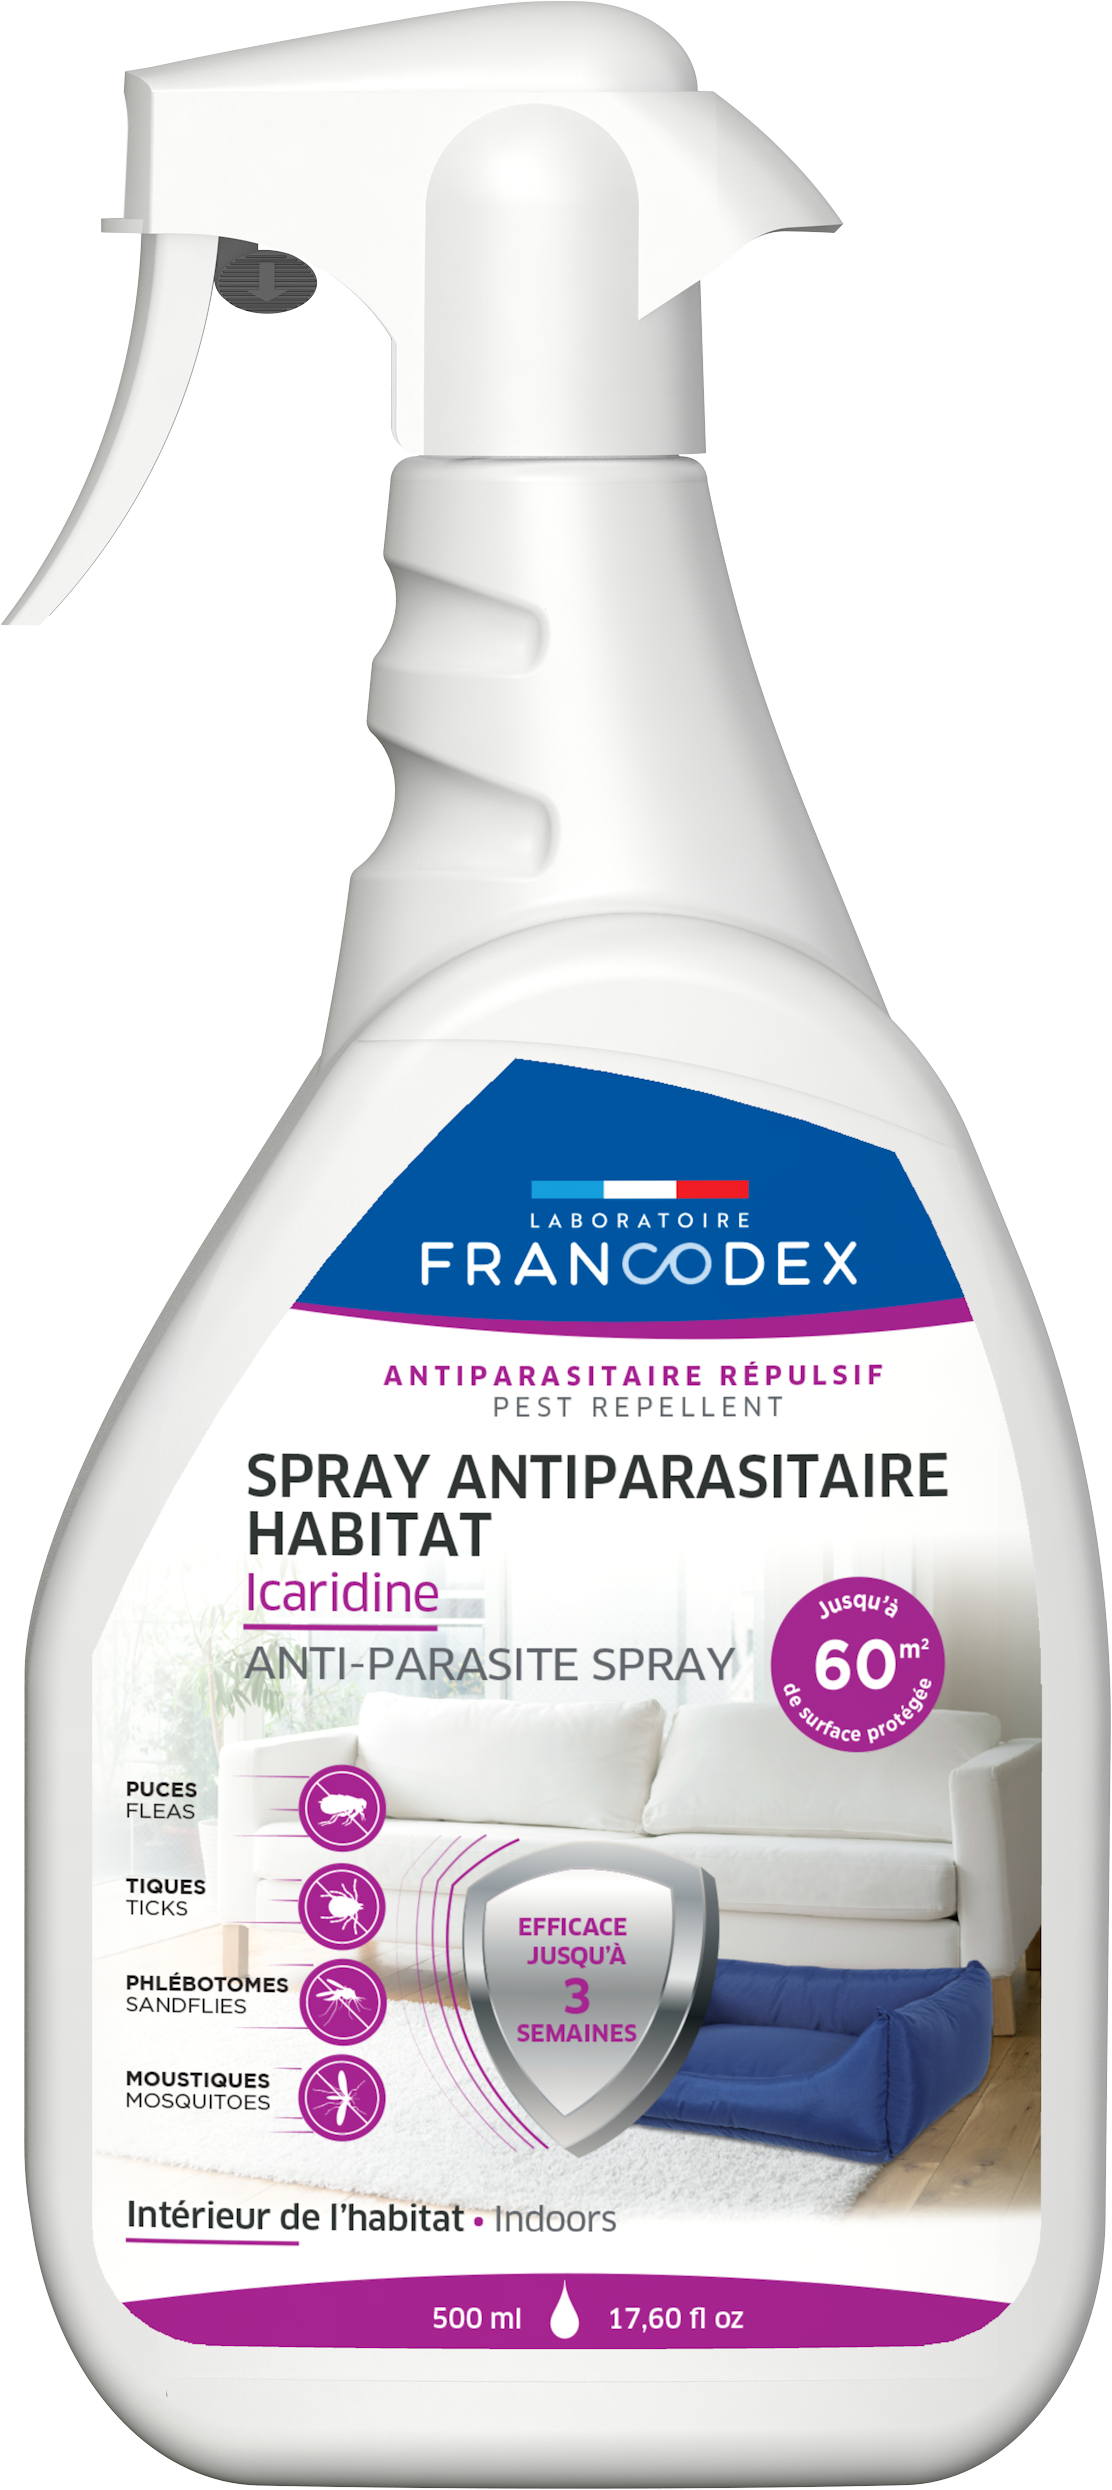 Francodex Spray Antiparasitaire Habitat Icaridine